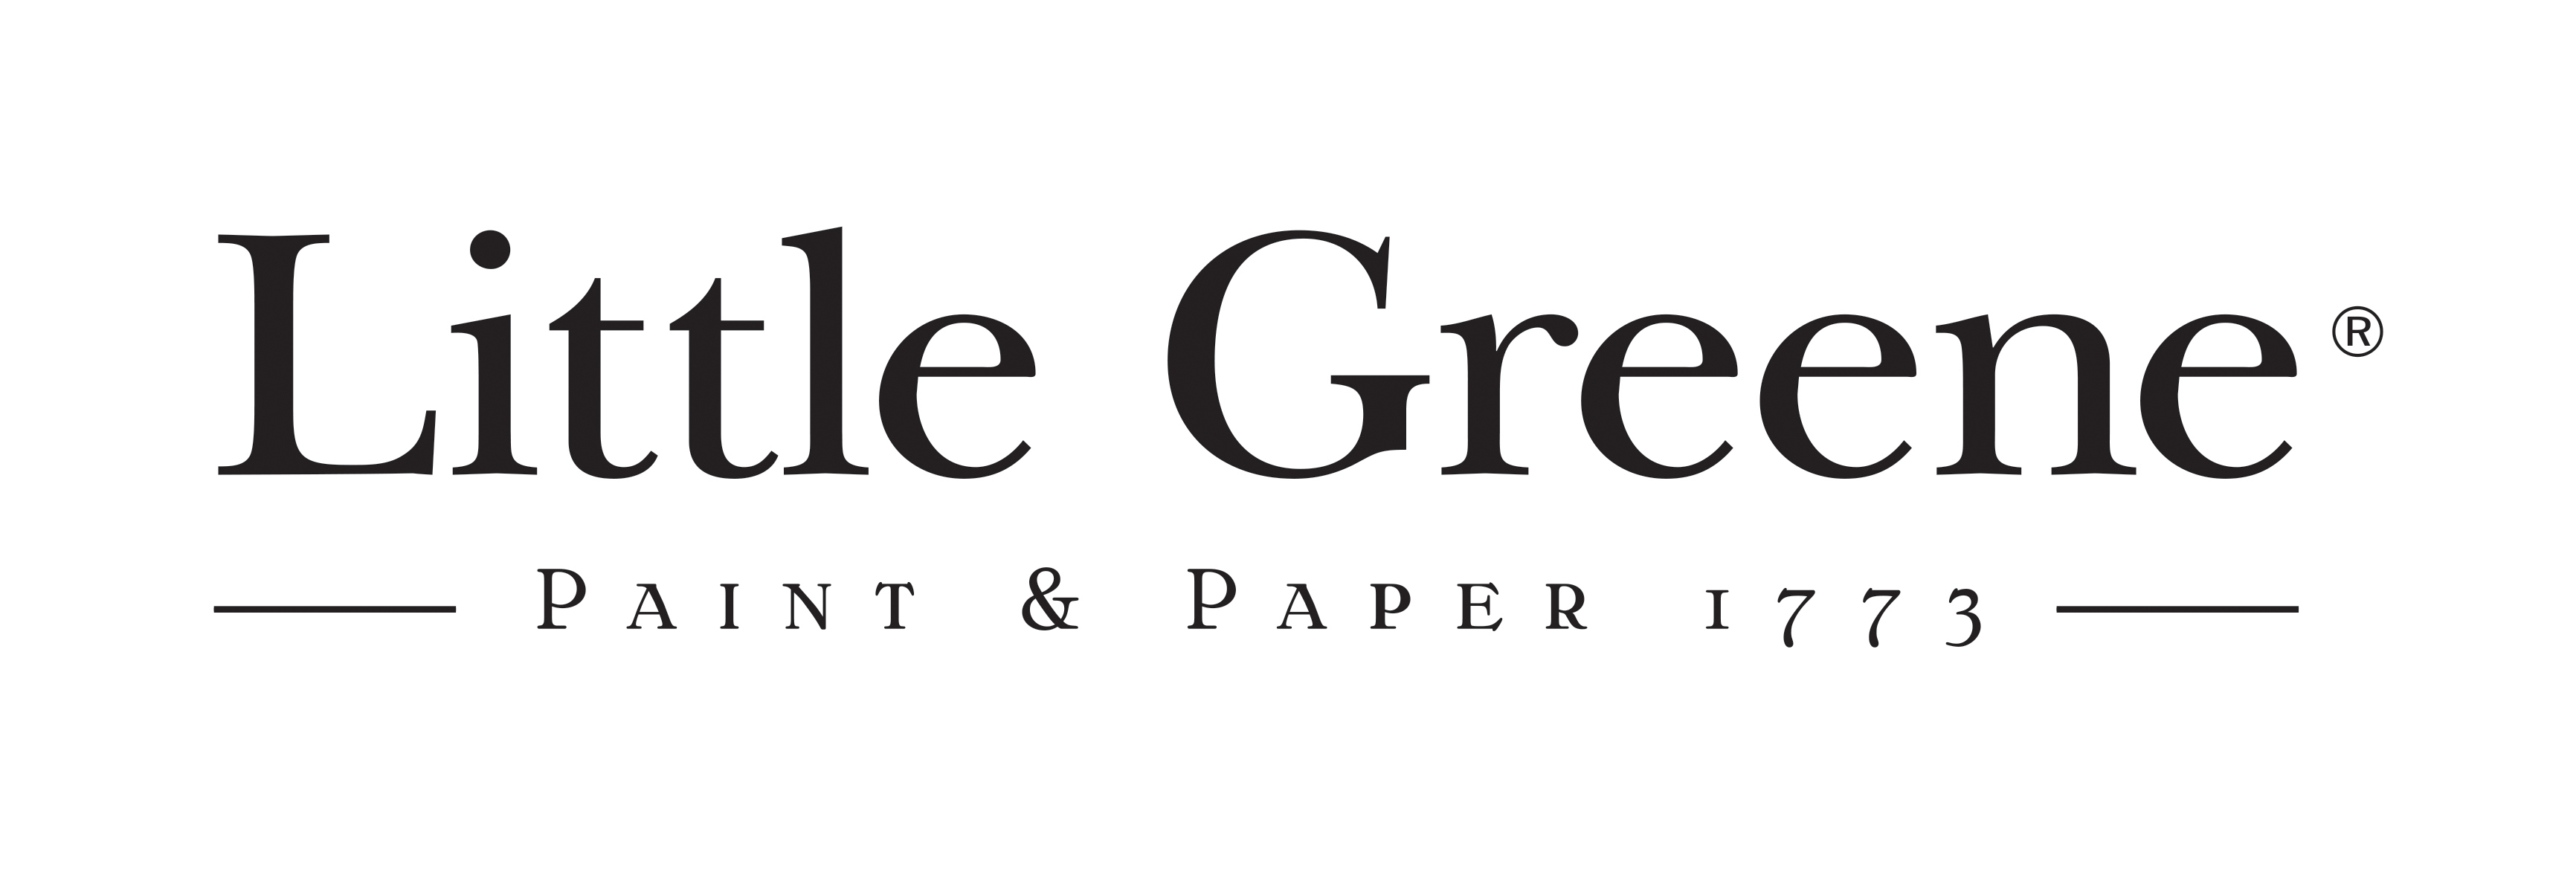 Логотип краски Little Greene, которую можно приобрести в магазинах Обойкин